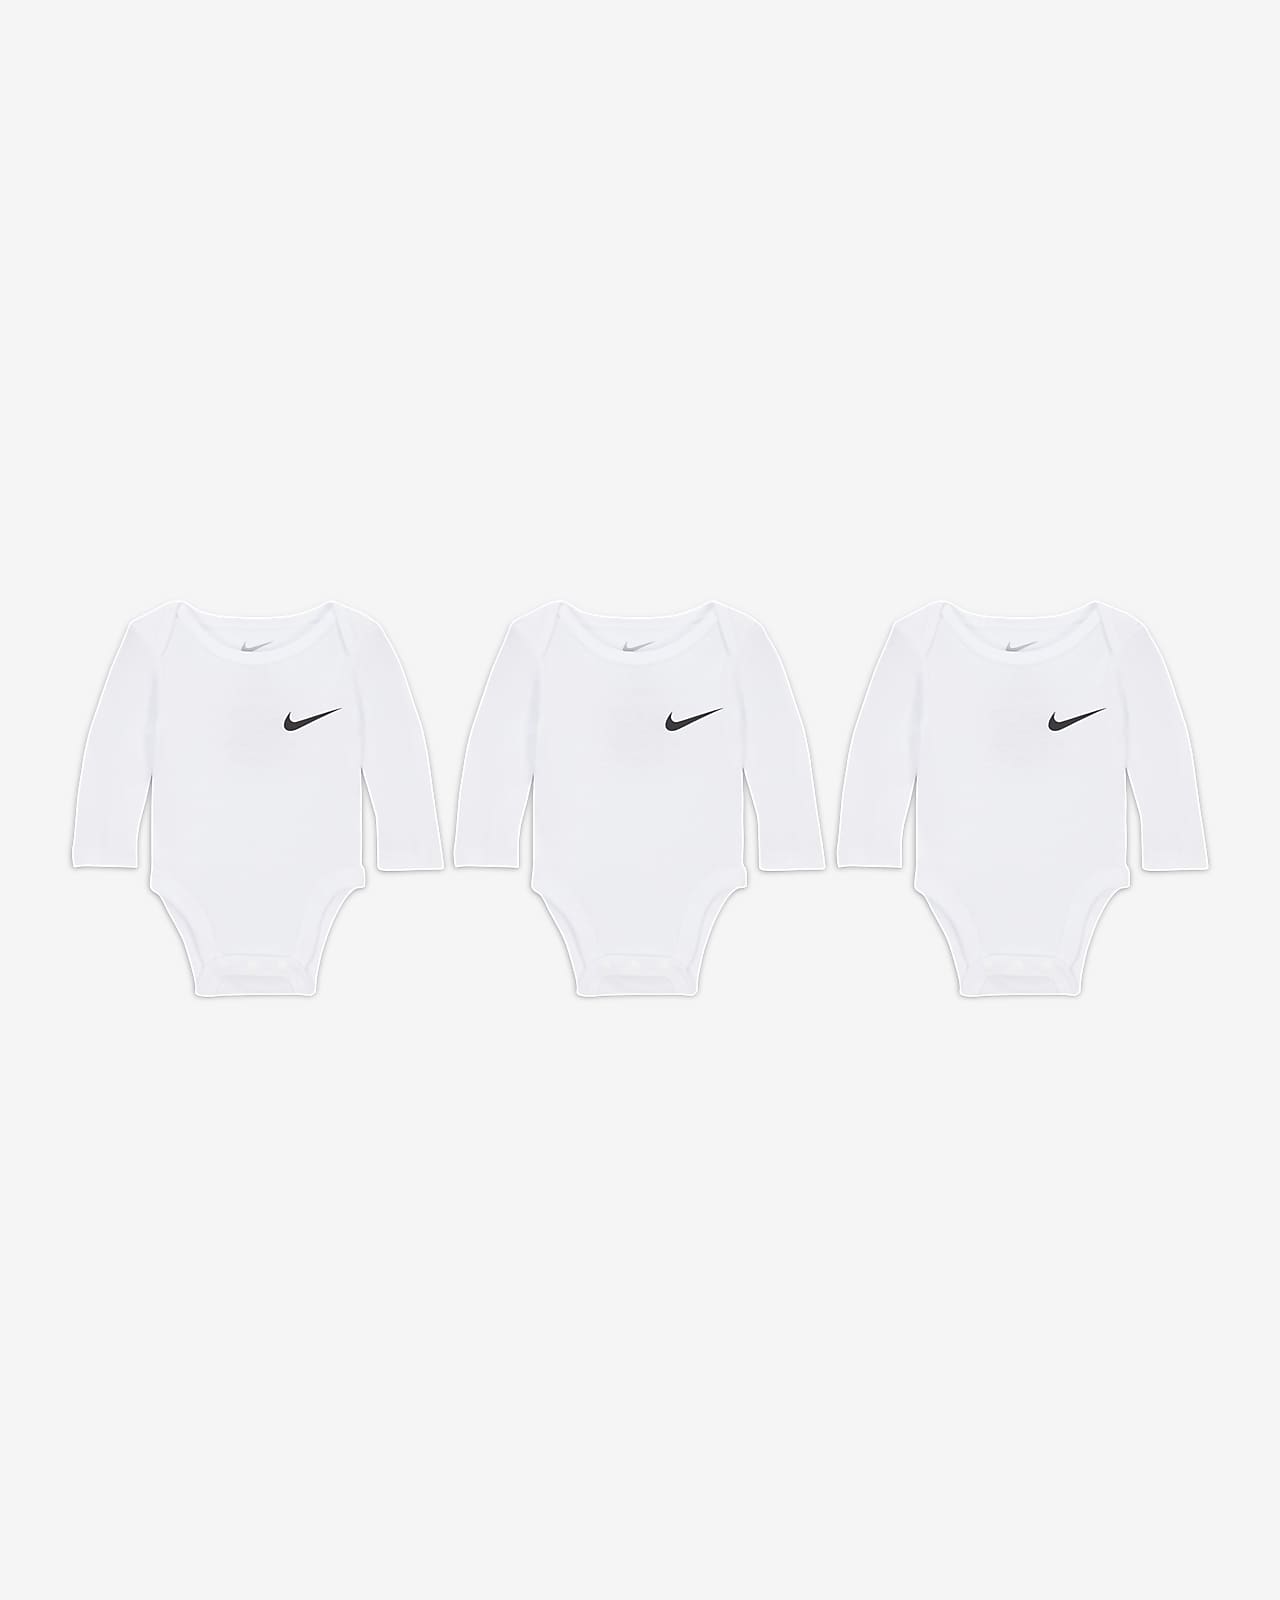 Nike Essentials 3-Pack Long Sleeve Baby Pack. Bodysuit Bodysuits